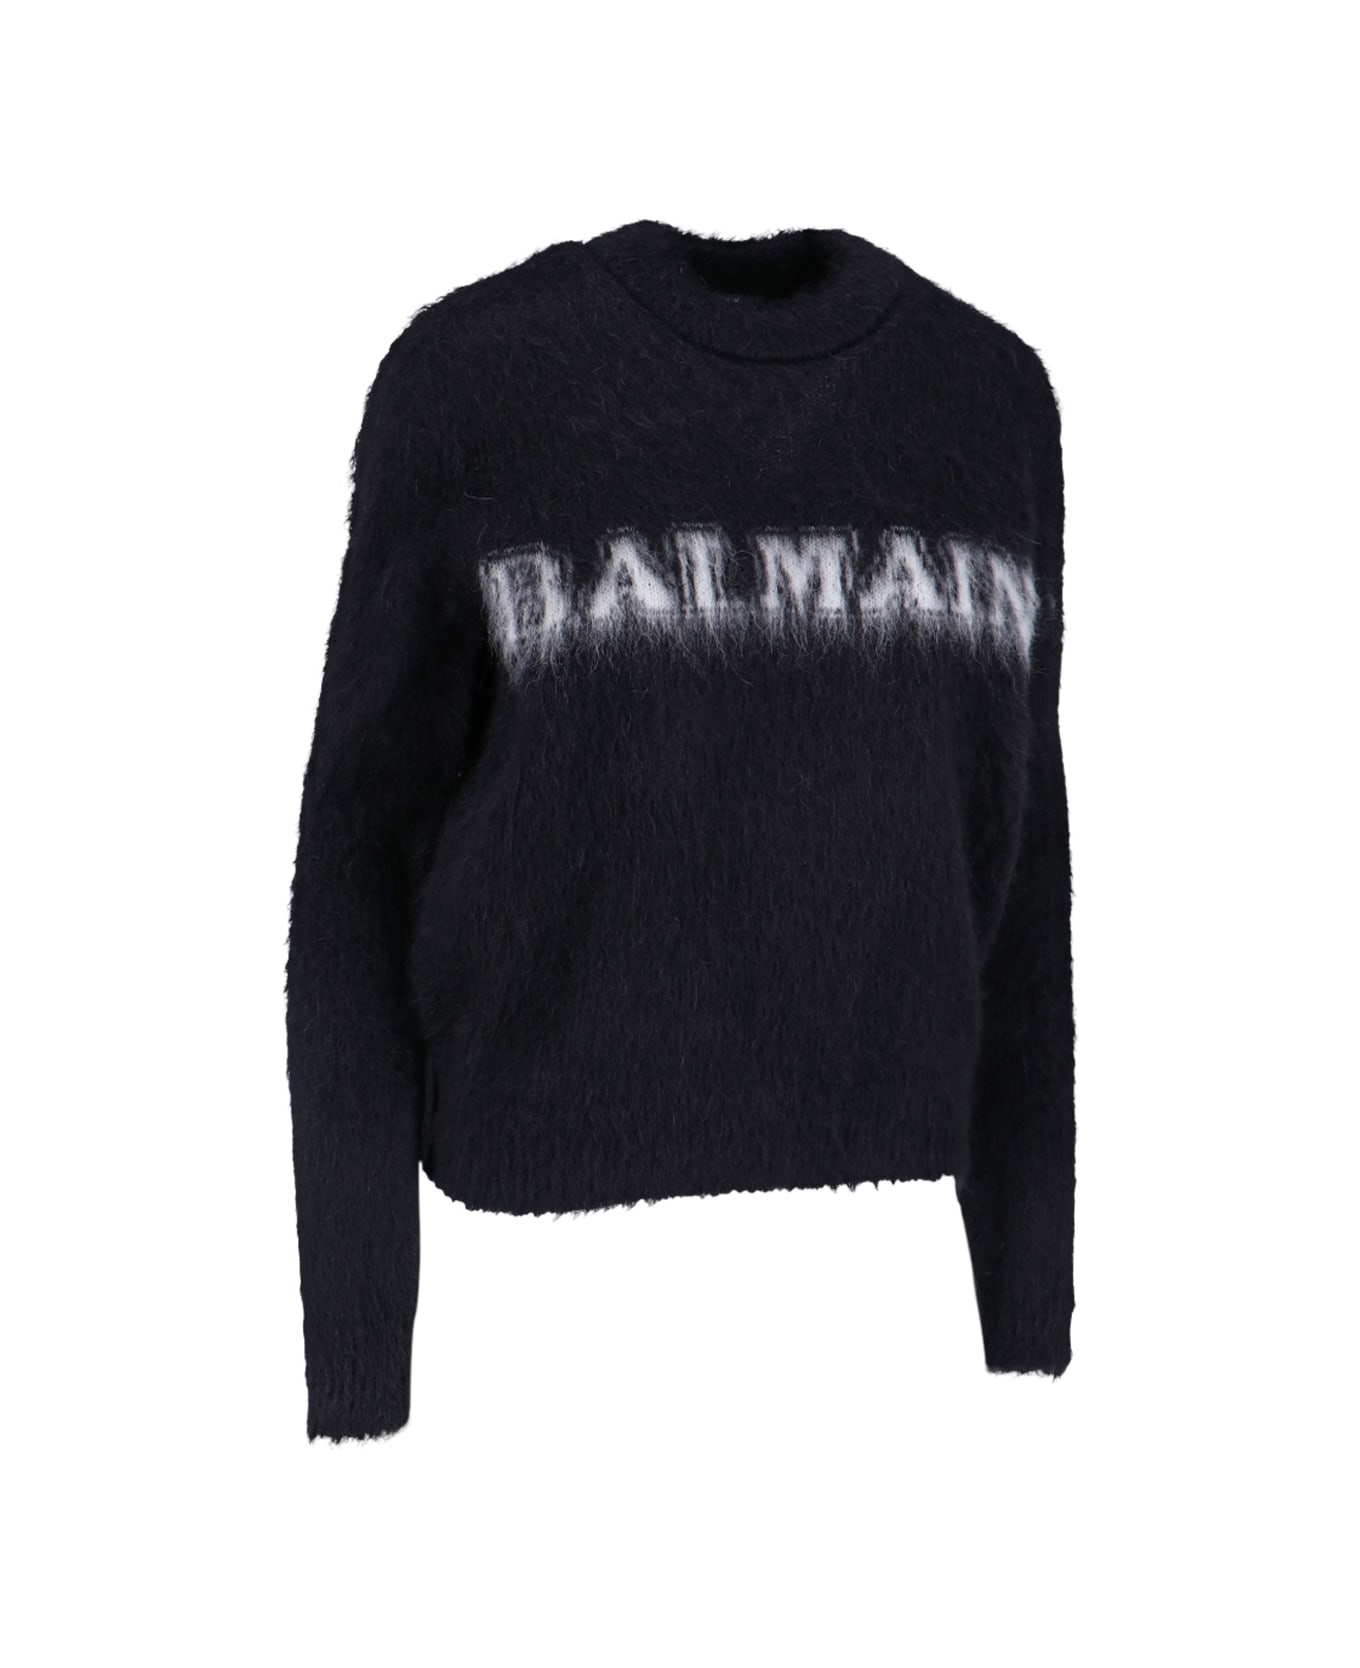 Balmain Logo Sweater - Noir/blanc